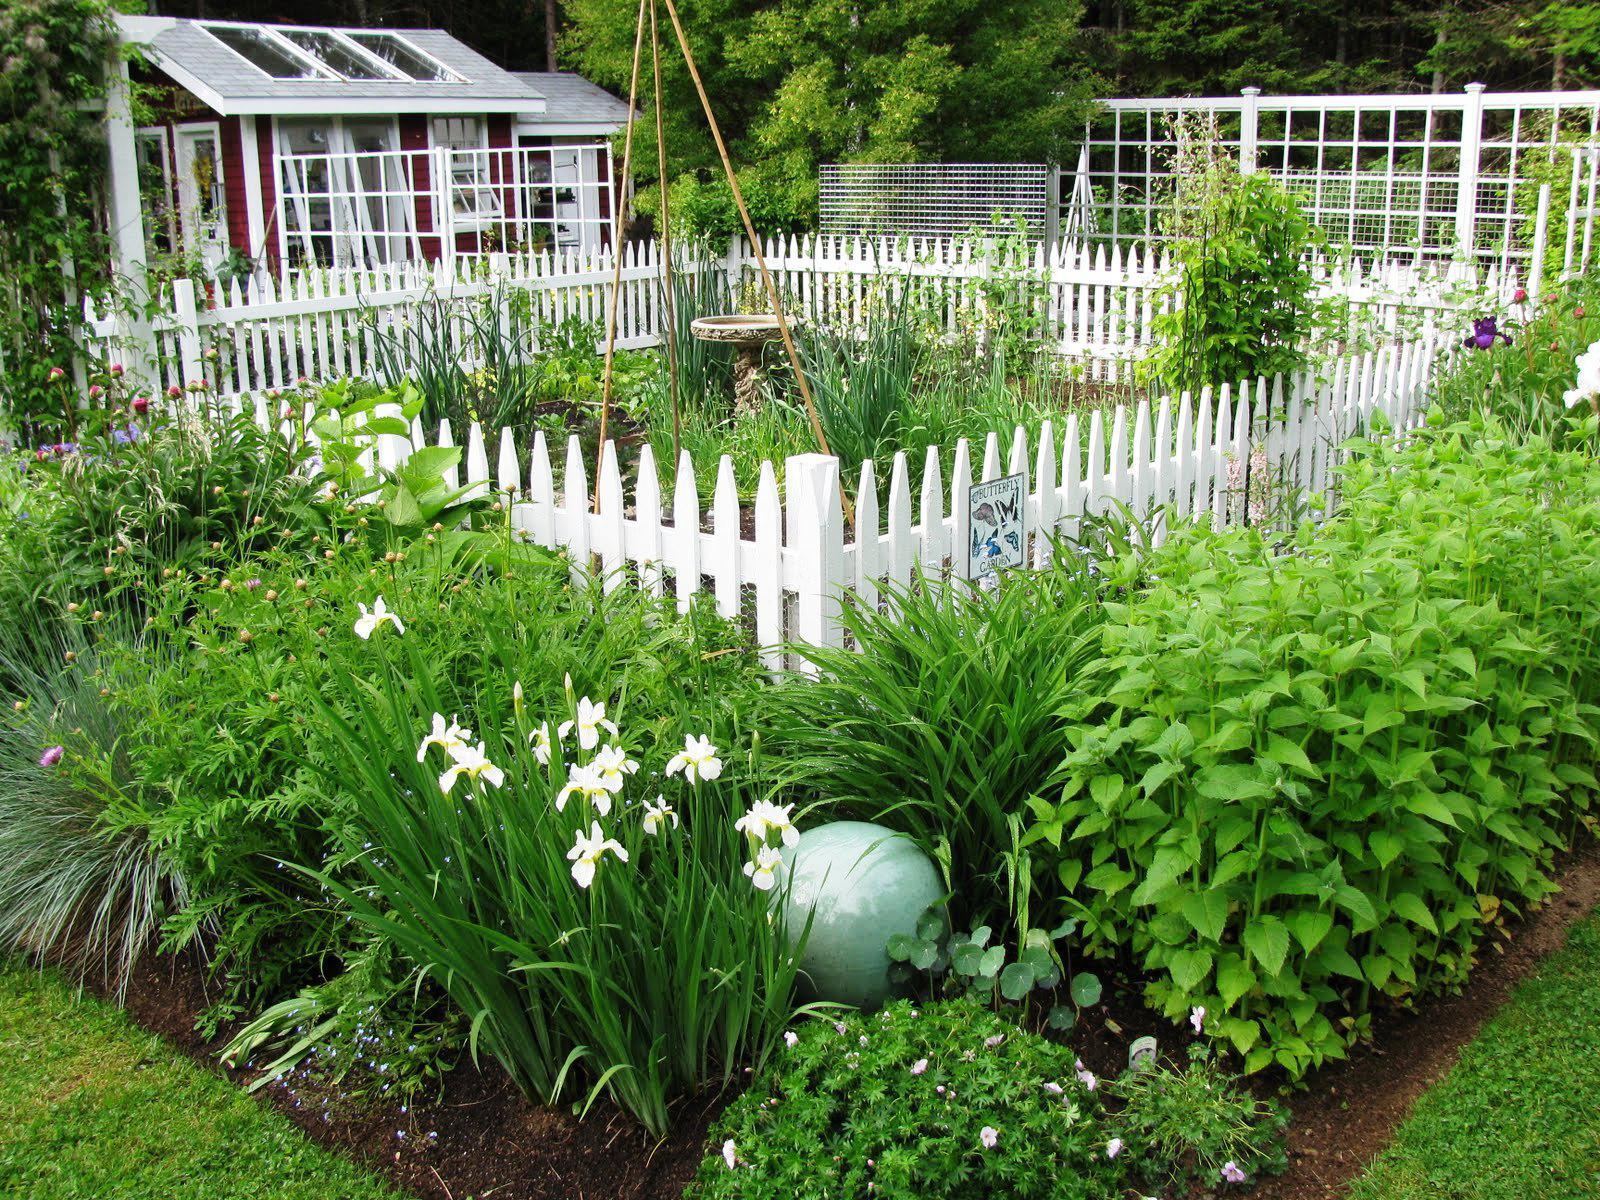 classy-image-vegetable-garden-fence-ideas-together-with-small-vegetable-garden-fence-fence-ideas-fence-ideas_garden-fence-ideas